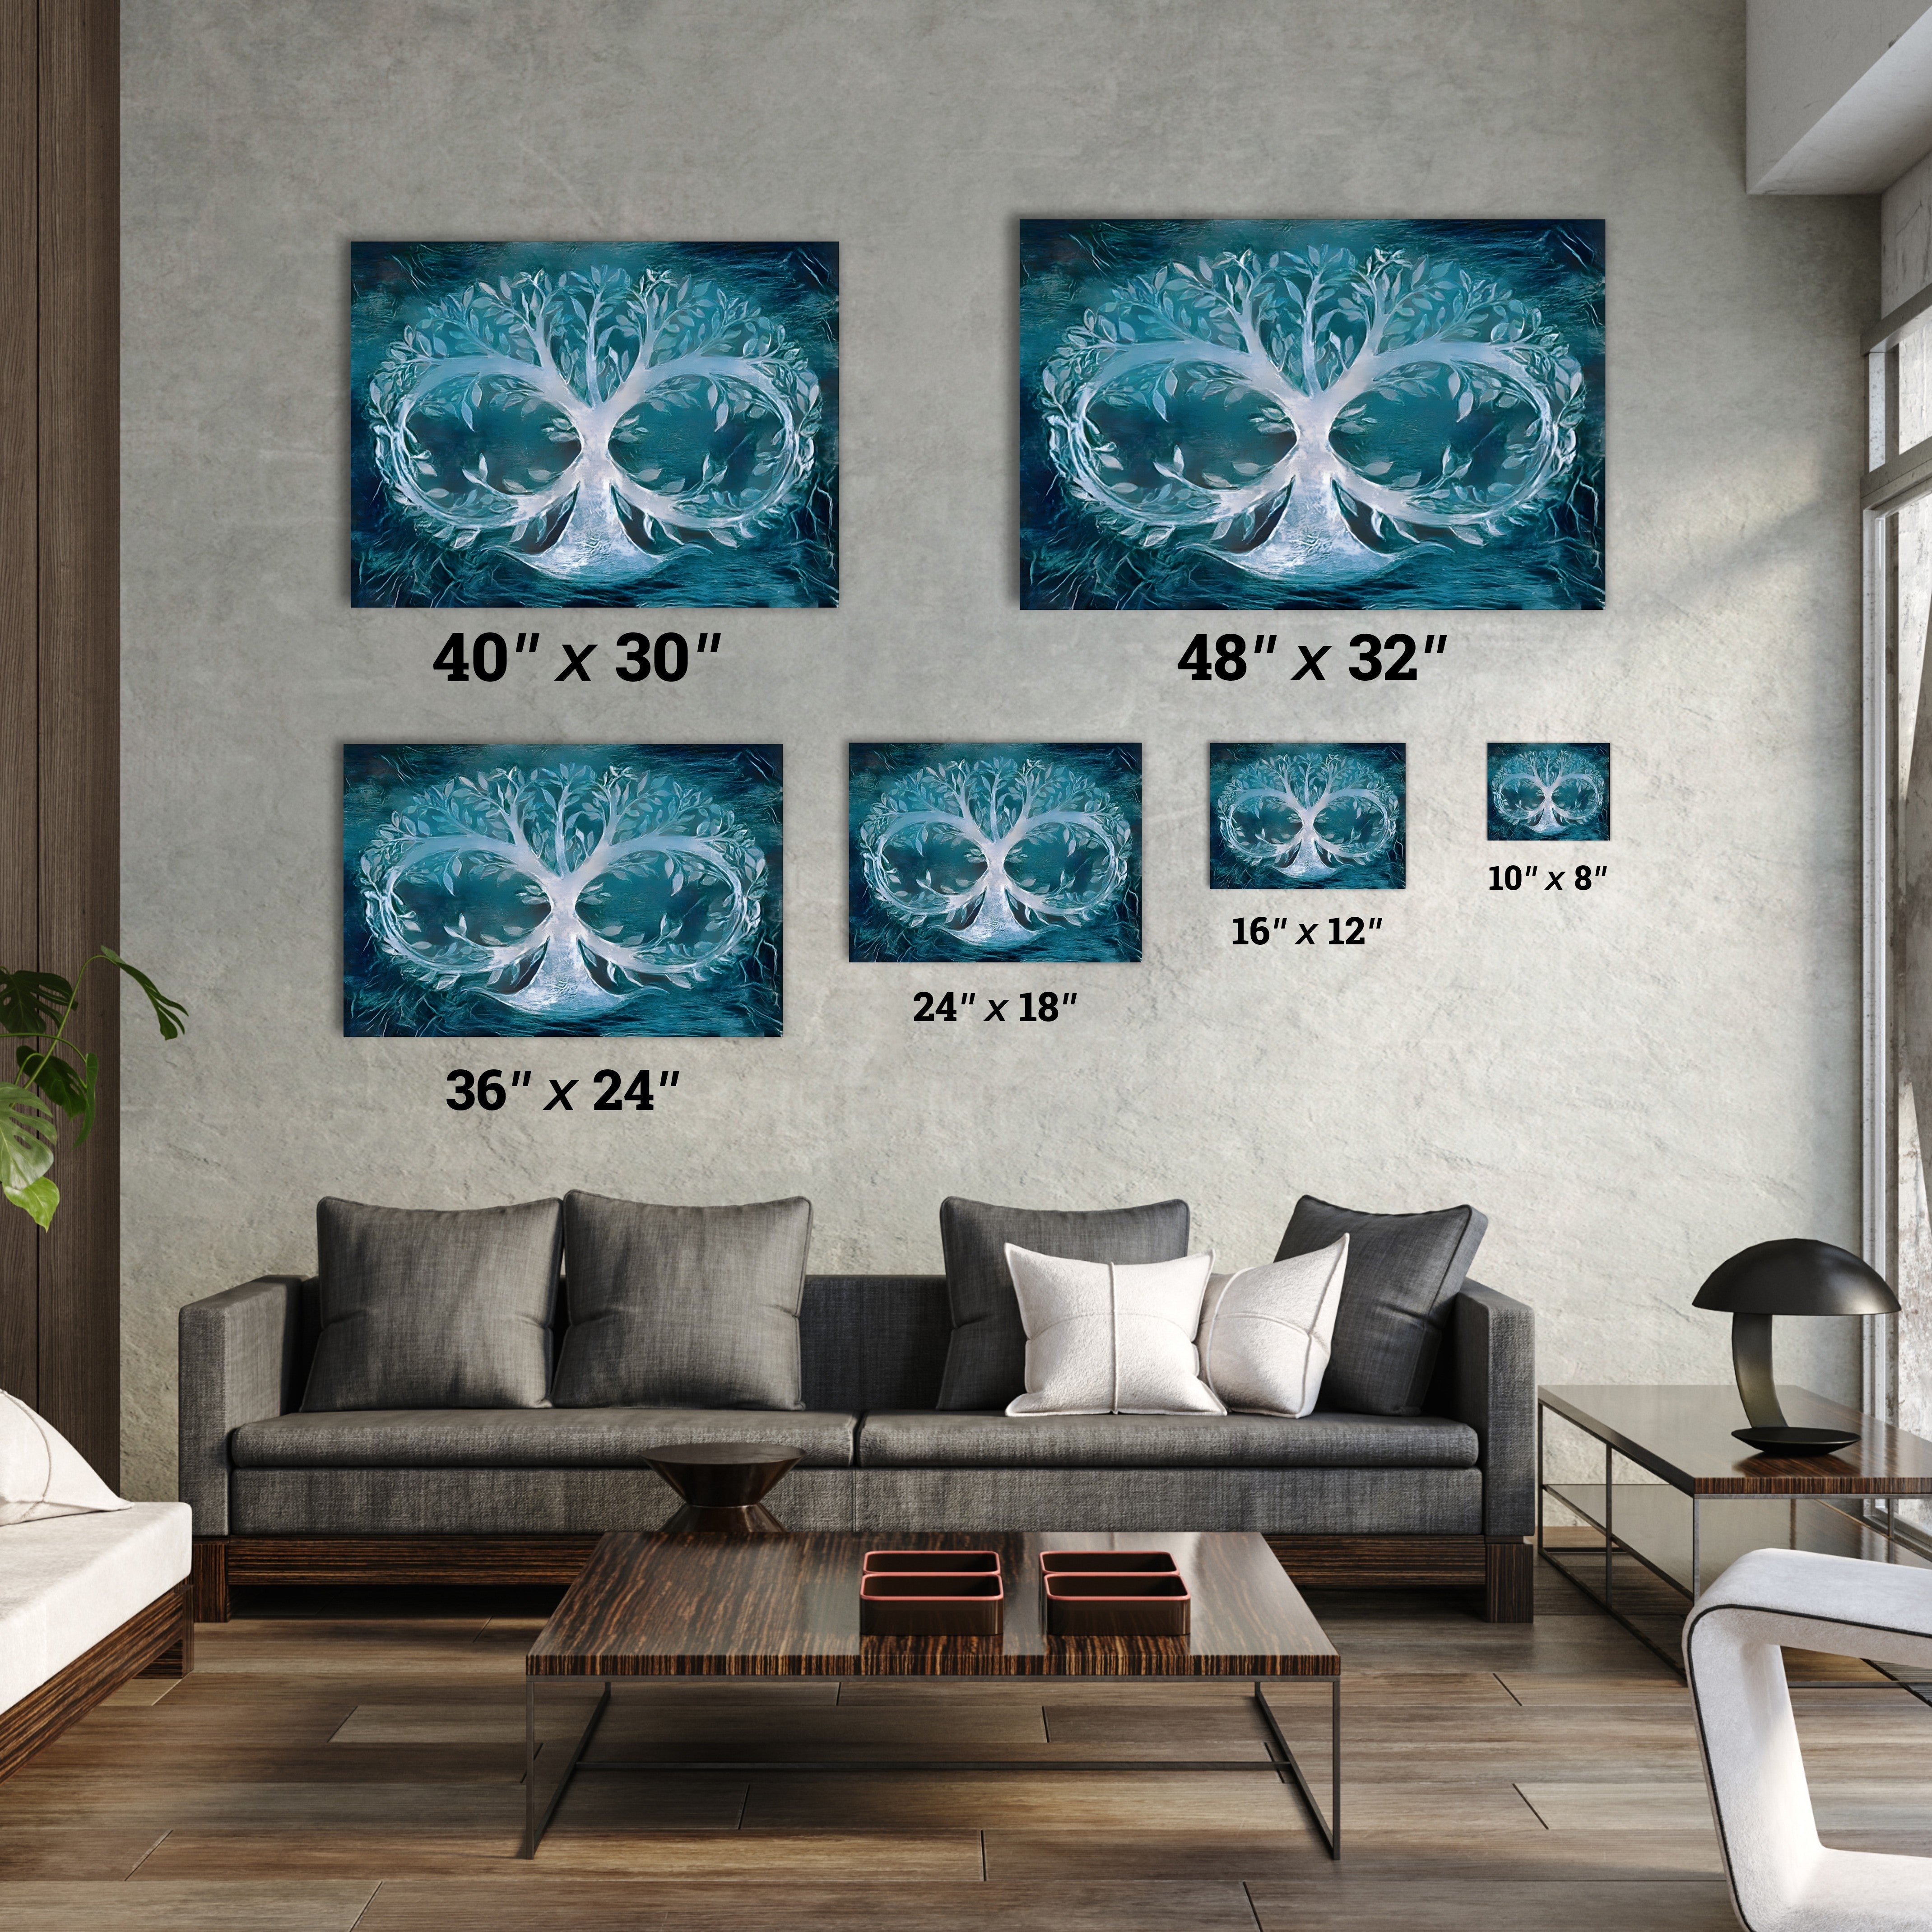 Infinite Galaxy Eko Från Skilda Horisonter Inspired Wall Art, Canvas Art, Wall Decor, Wall Art, Artistic Painting, Stars and Galaxy Picture